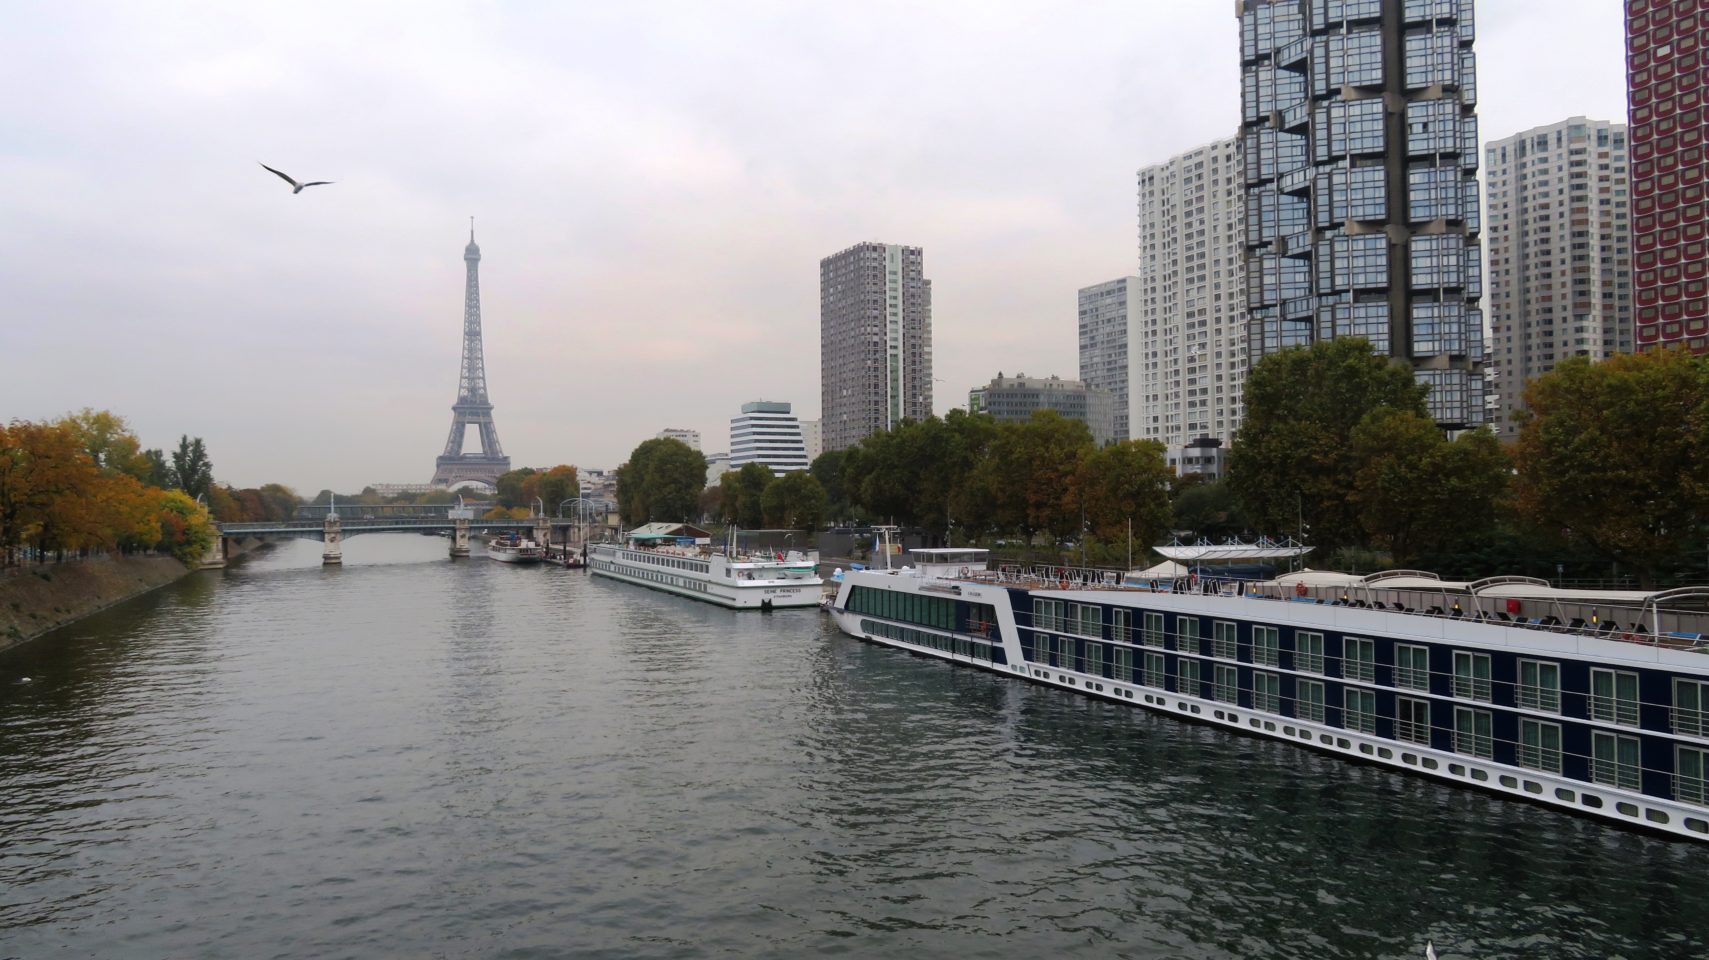 AmaLegro River Cruise Ship Docked in Paris, France ~ Paris and Normandie AMAWaterways Cruise